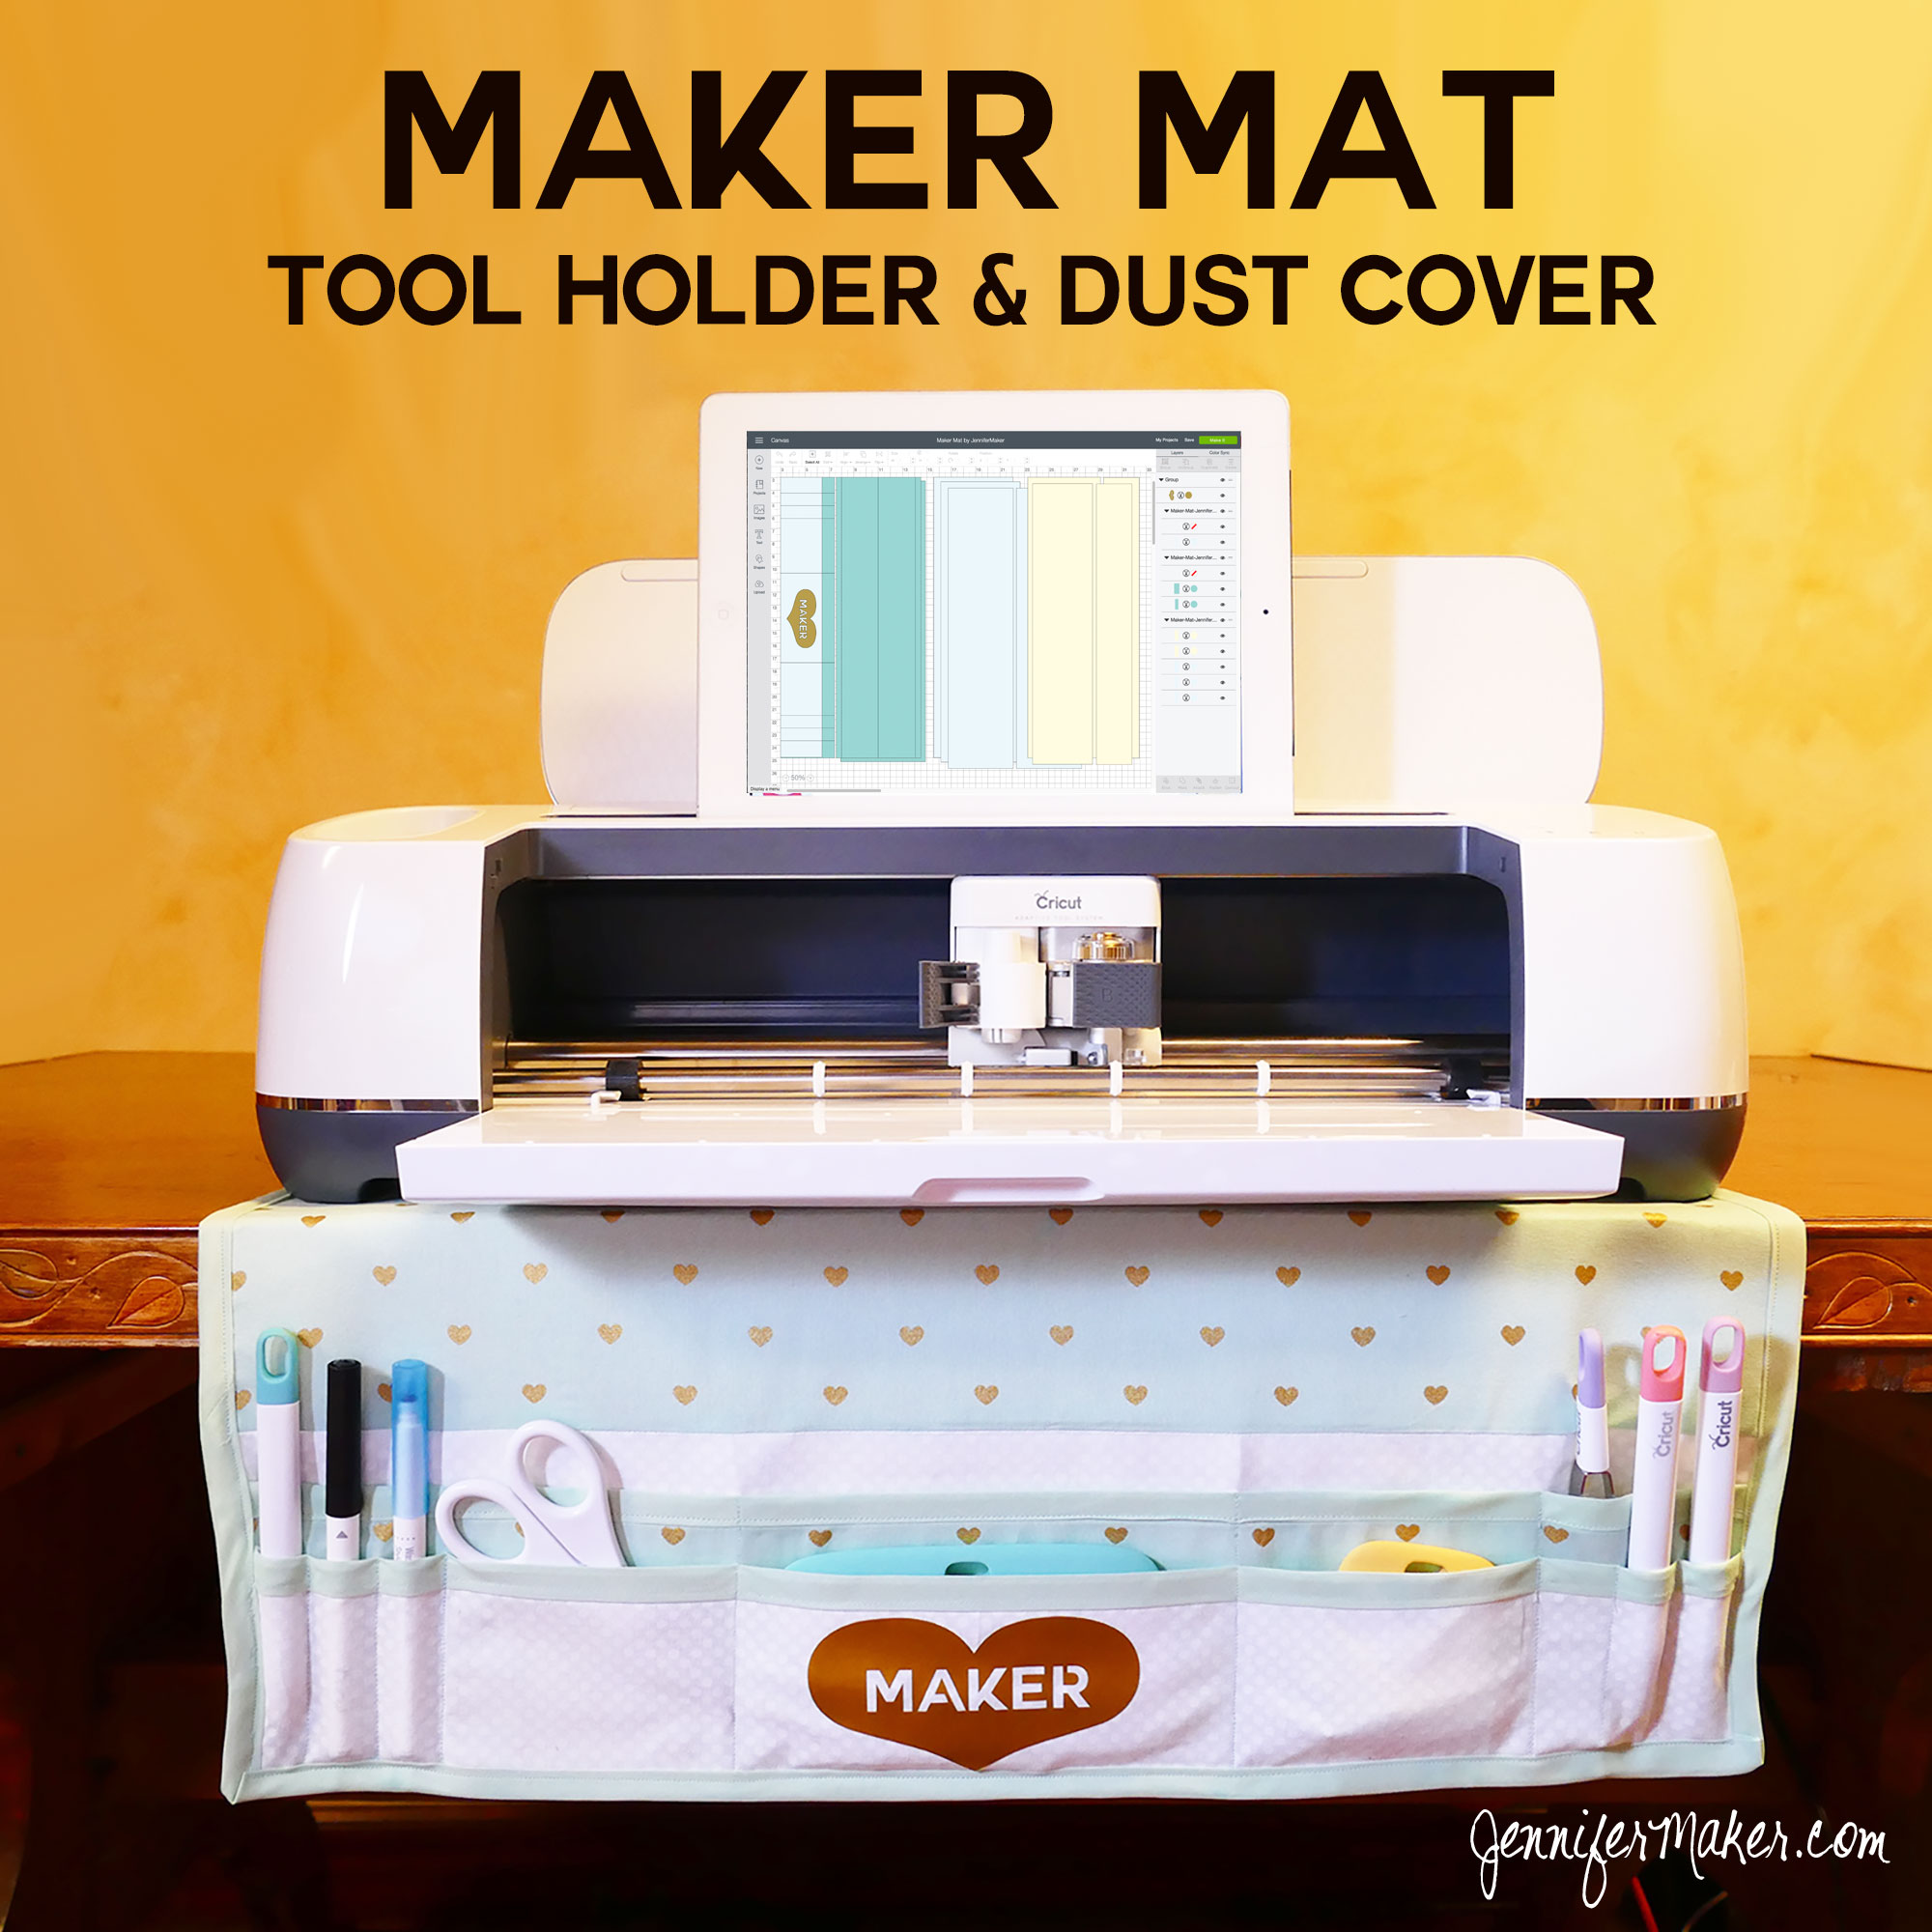 My Cricut Maker Mat: Organizer + Dust Cover in One!